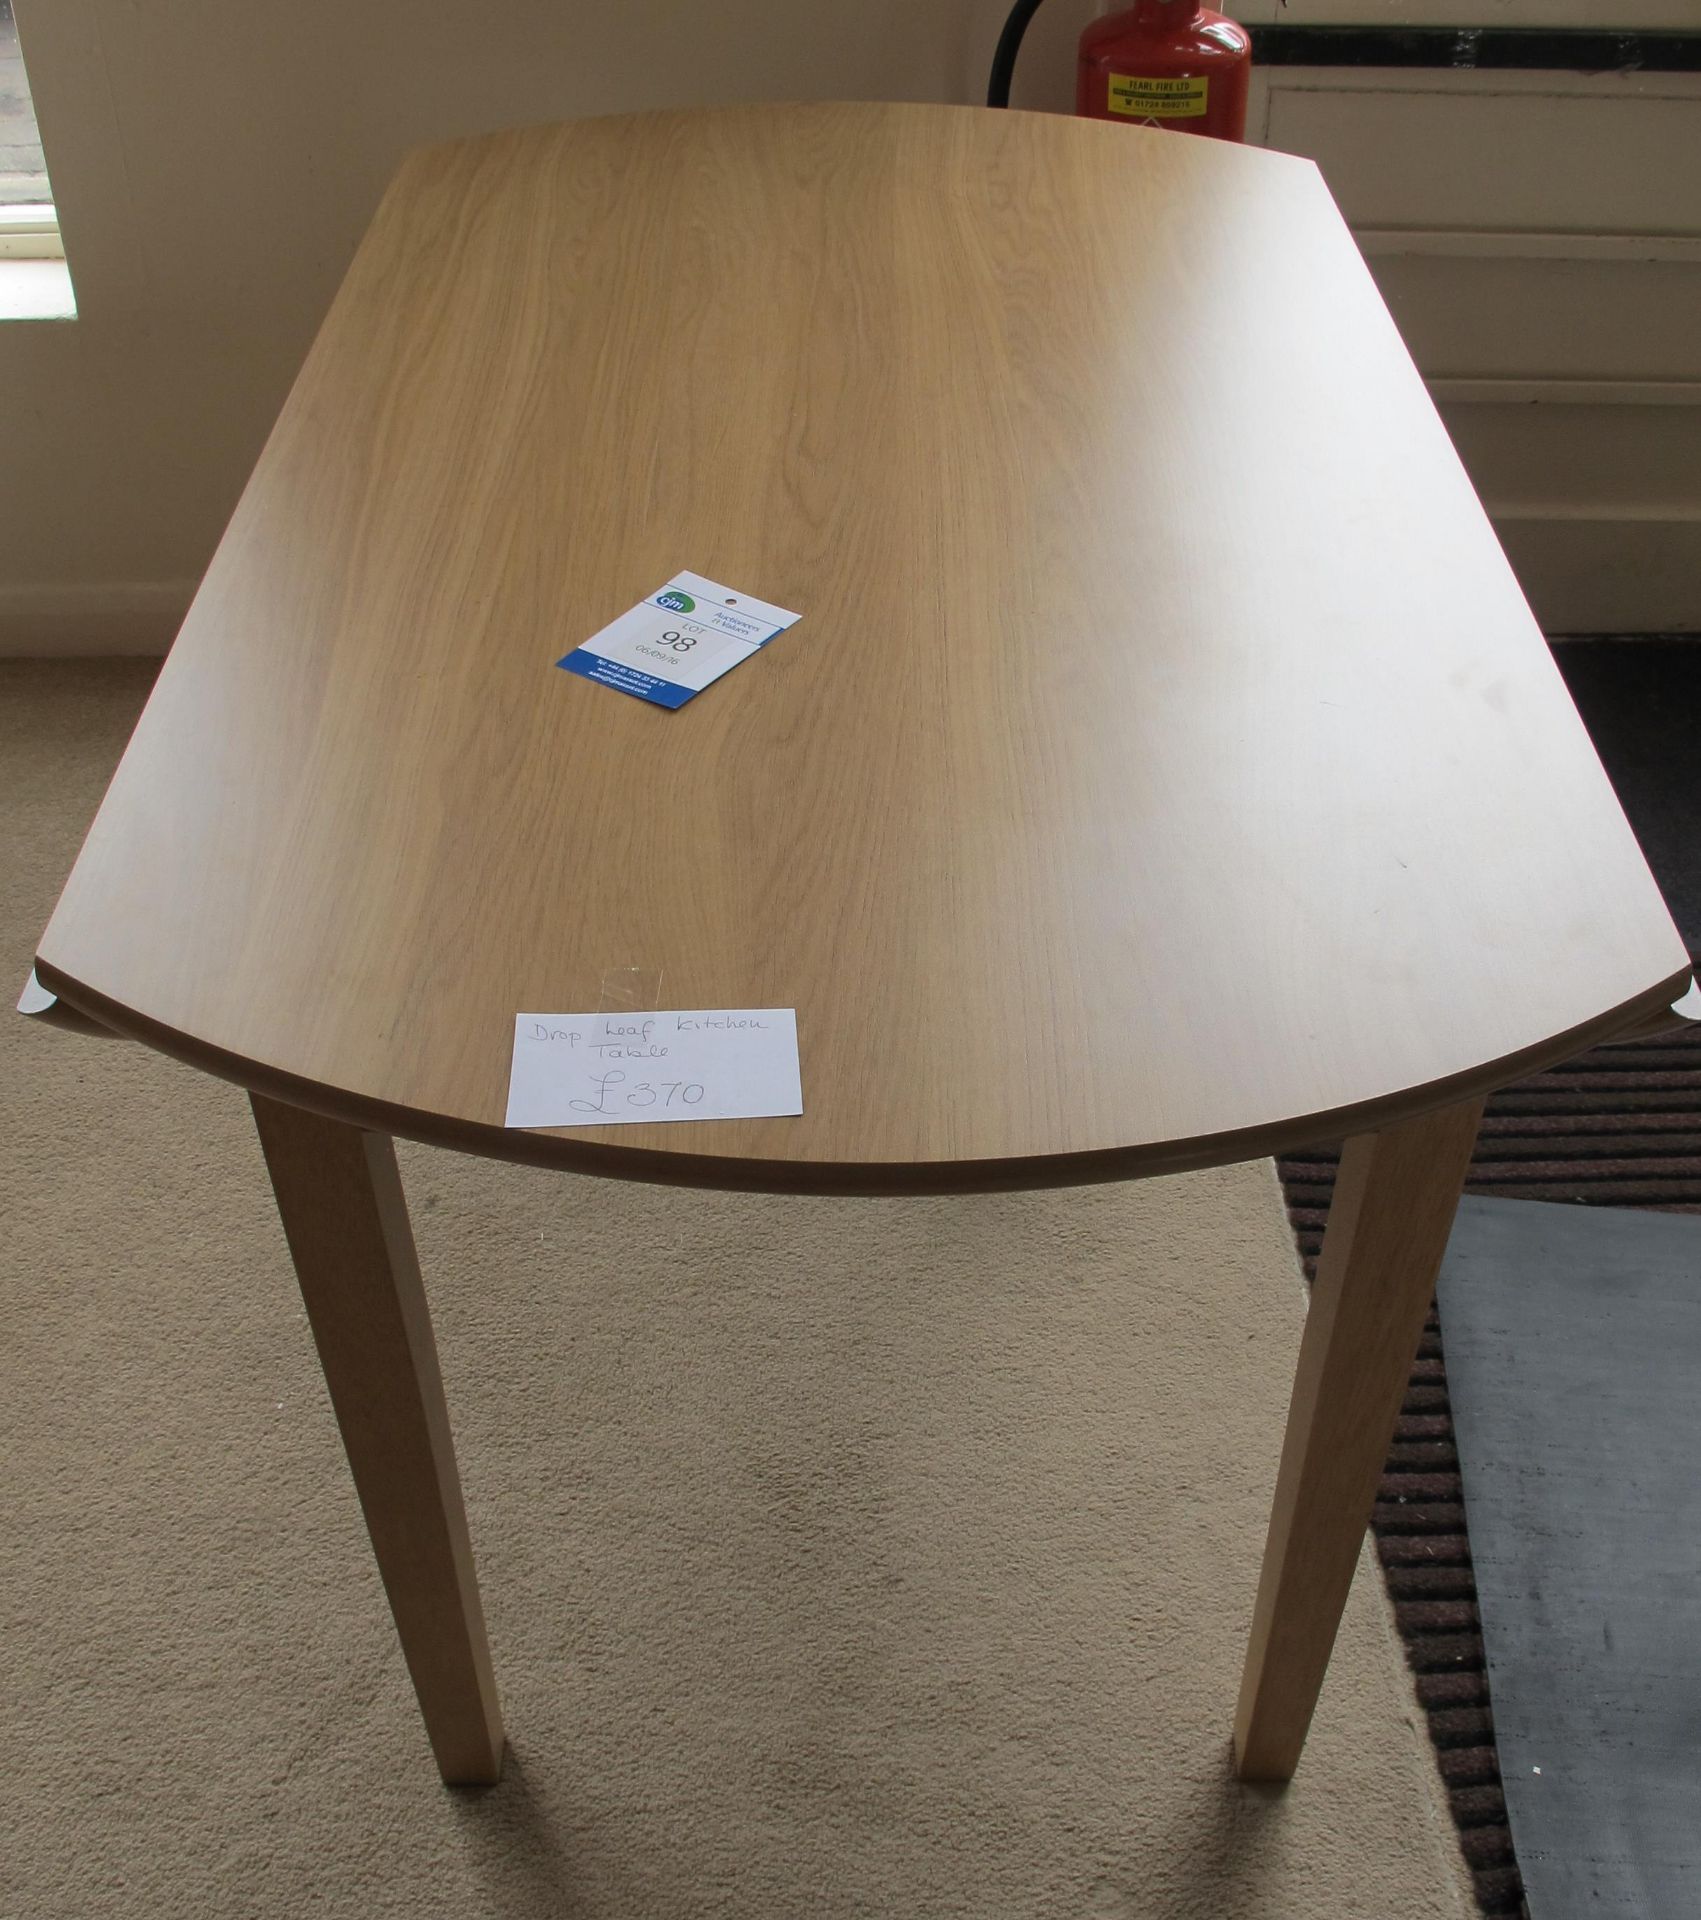 Circular drop leaf kitchen table. 120cm diameter. RRP £370 - Image 2 of 2